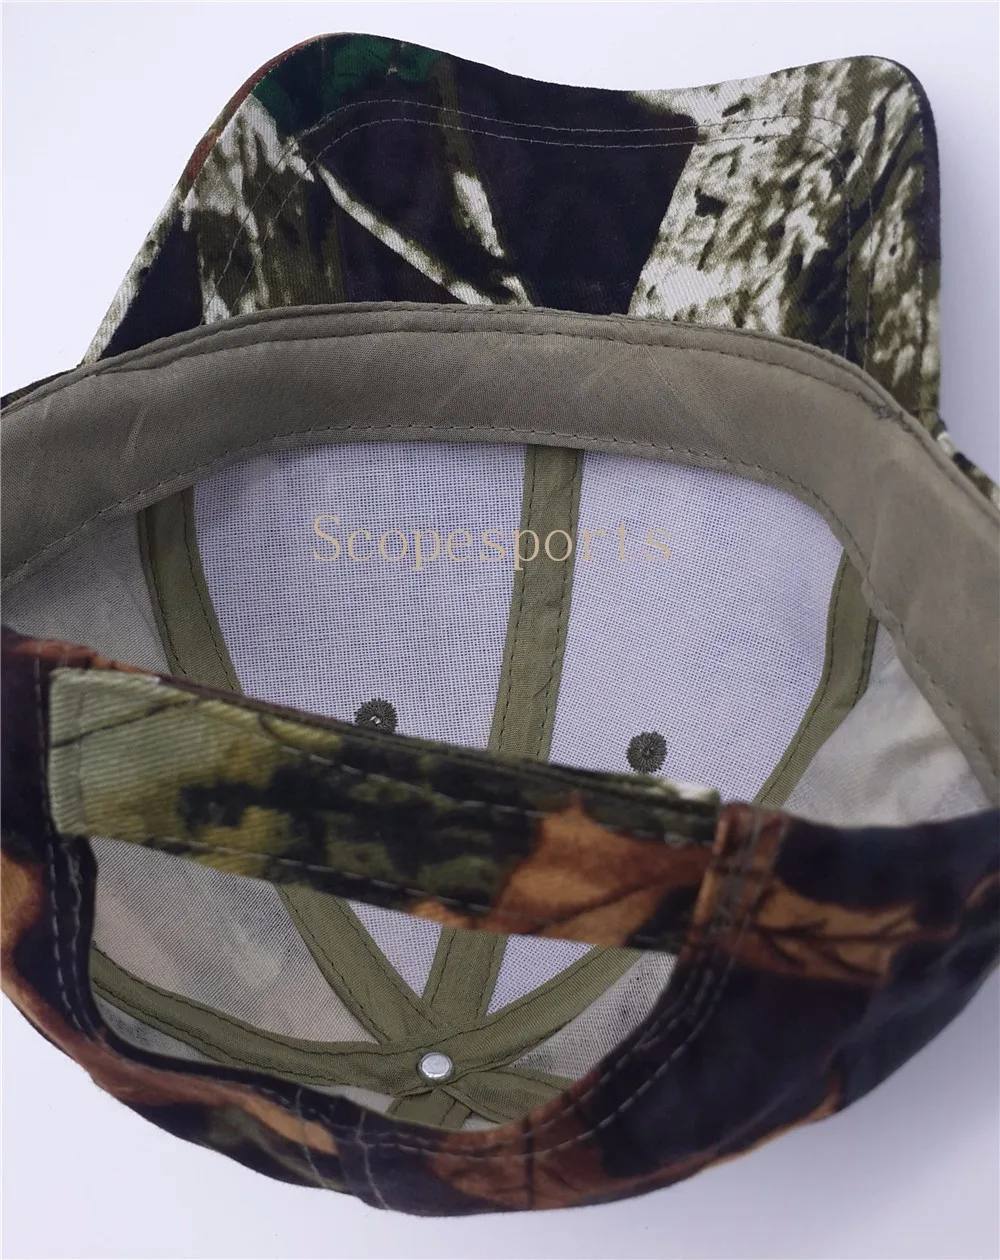 New Hunting Cap Camouflage Military Tactical Peaked Cap Fishing Hiking Bionic Cap Camo Baseball Hat Free Shipping (6)